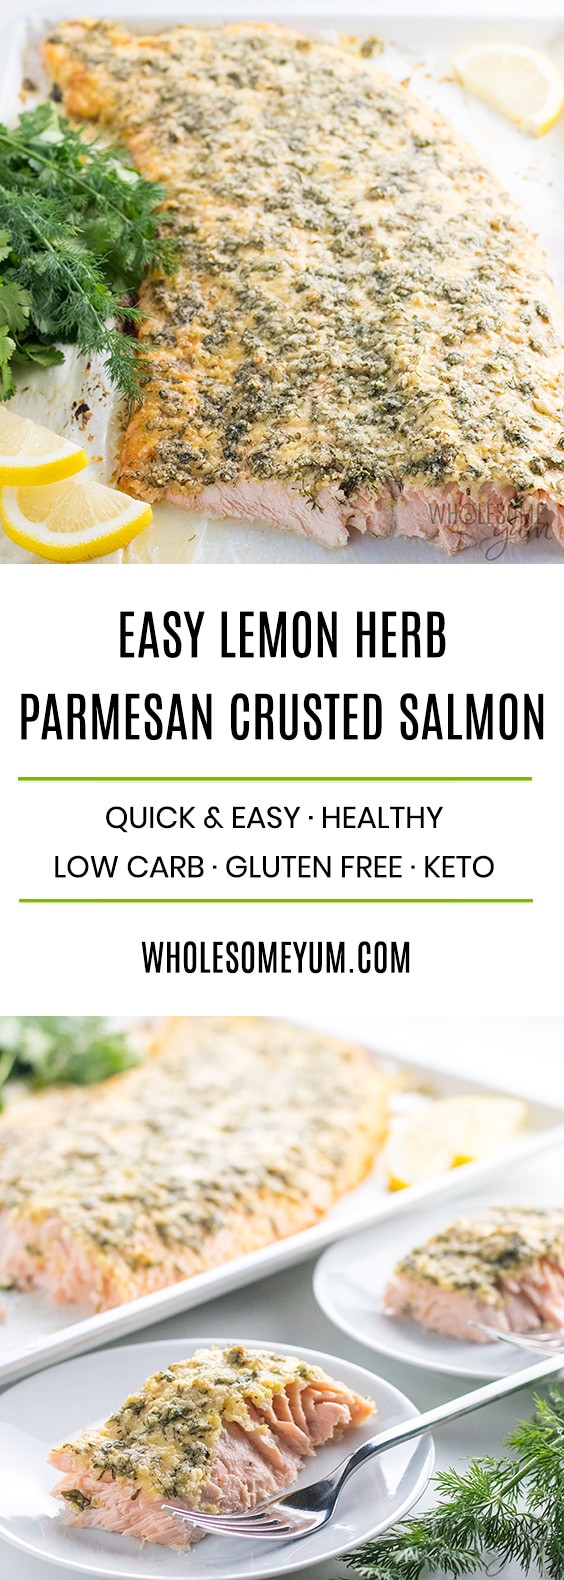 Parmesan Crusted Salmon Keto
 Baked Lemon Herb Parmesan Crusted Salmon Recipe The